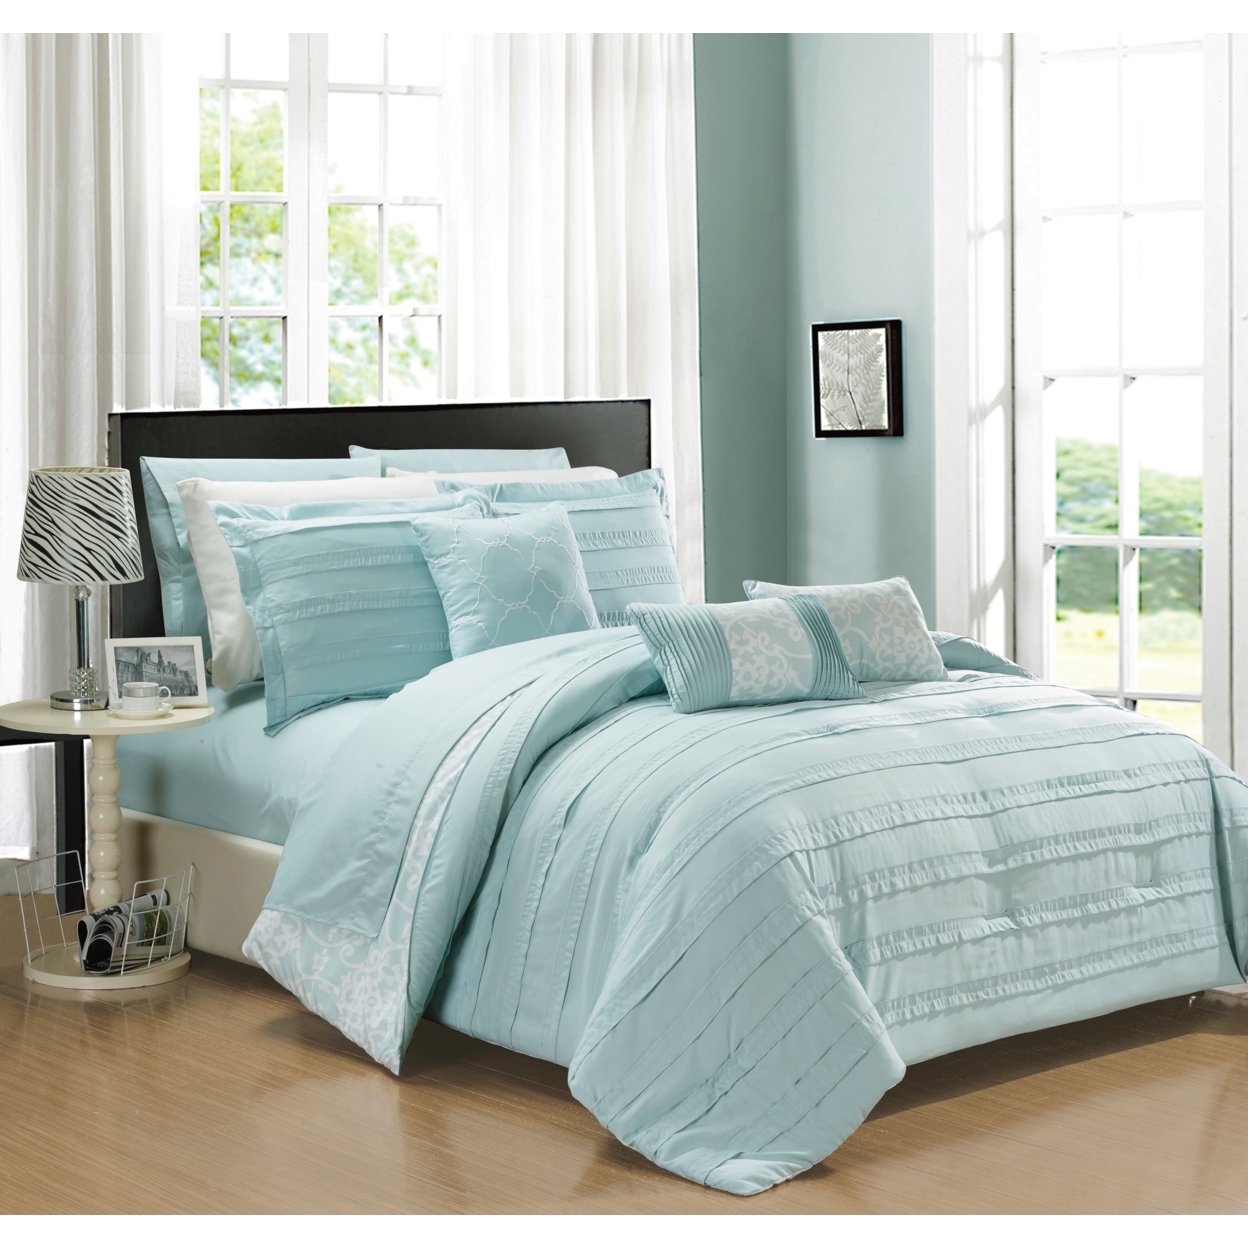 10-Piece Reversible Bed In A Bag Comforter & Sheet Set, Multiple Colors - Grey, Queen